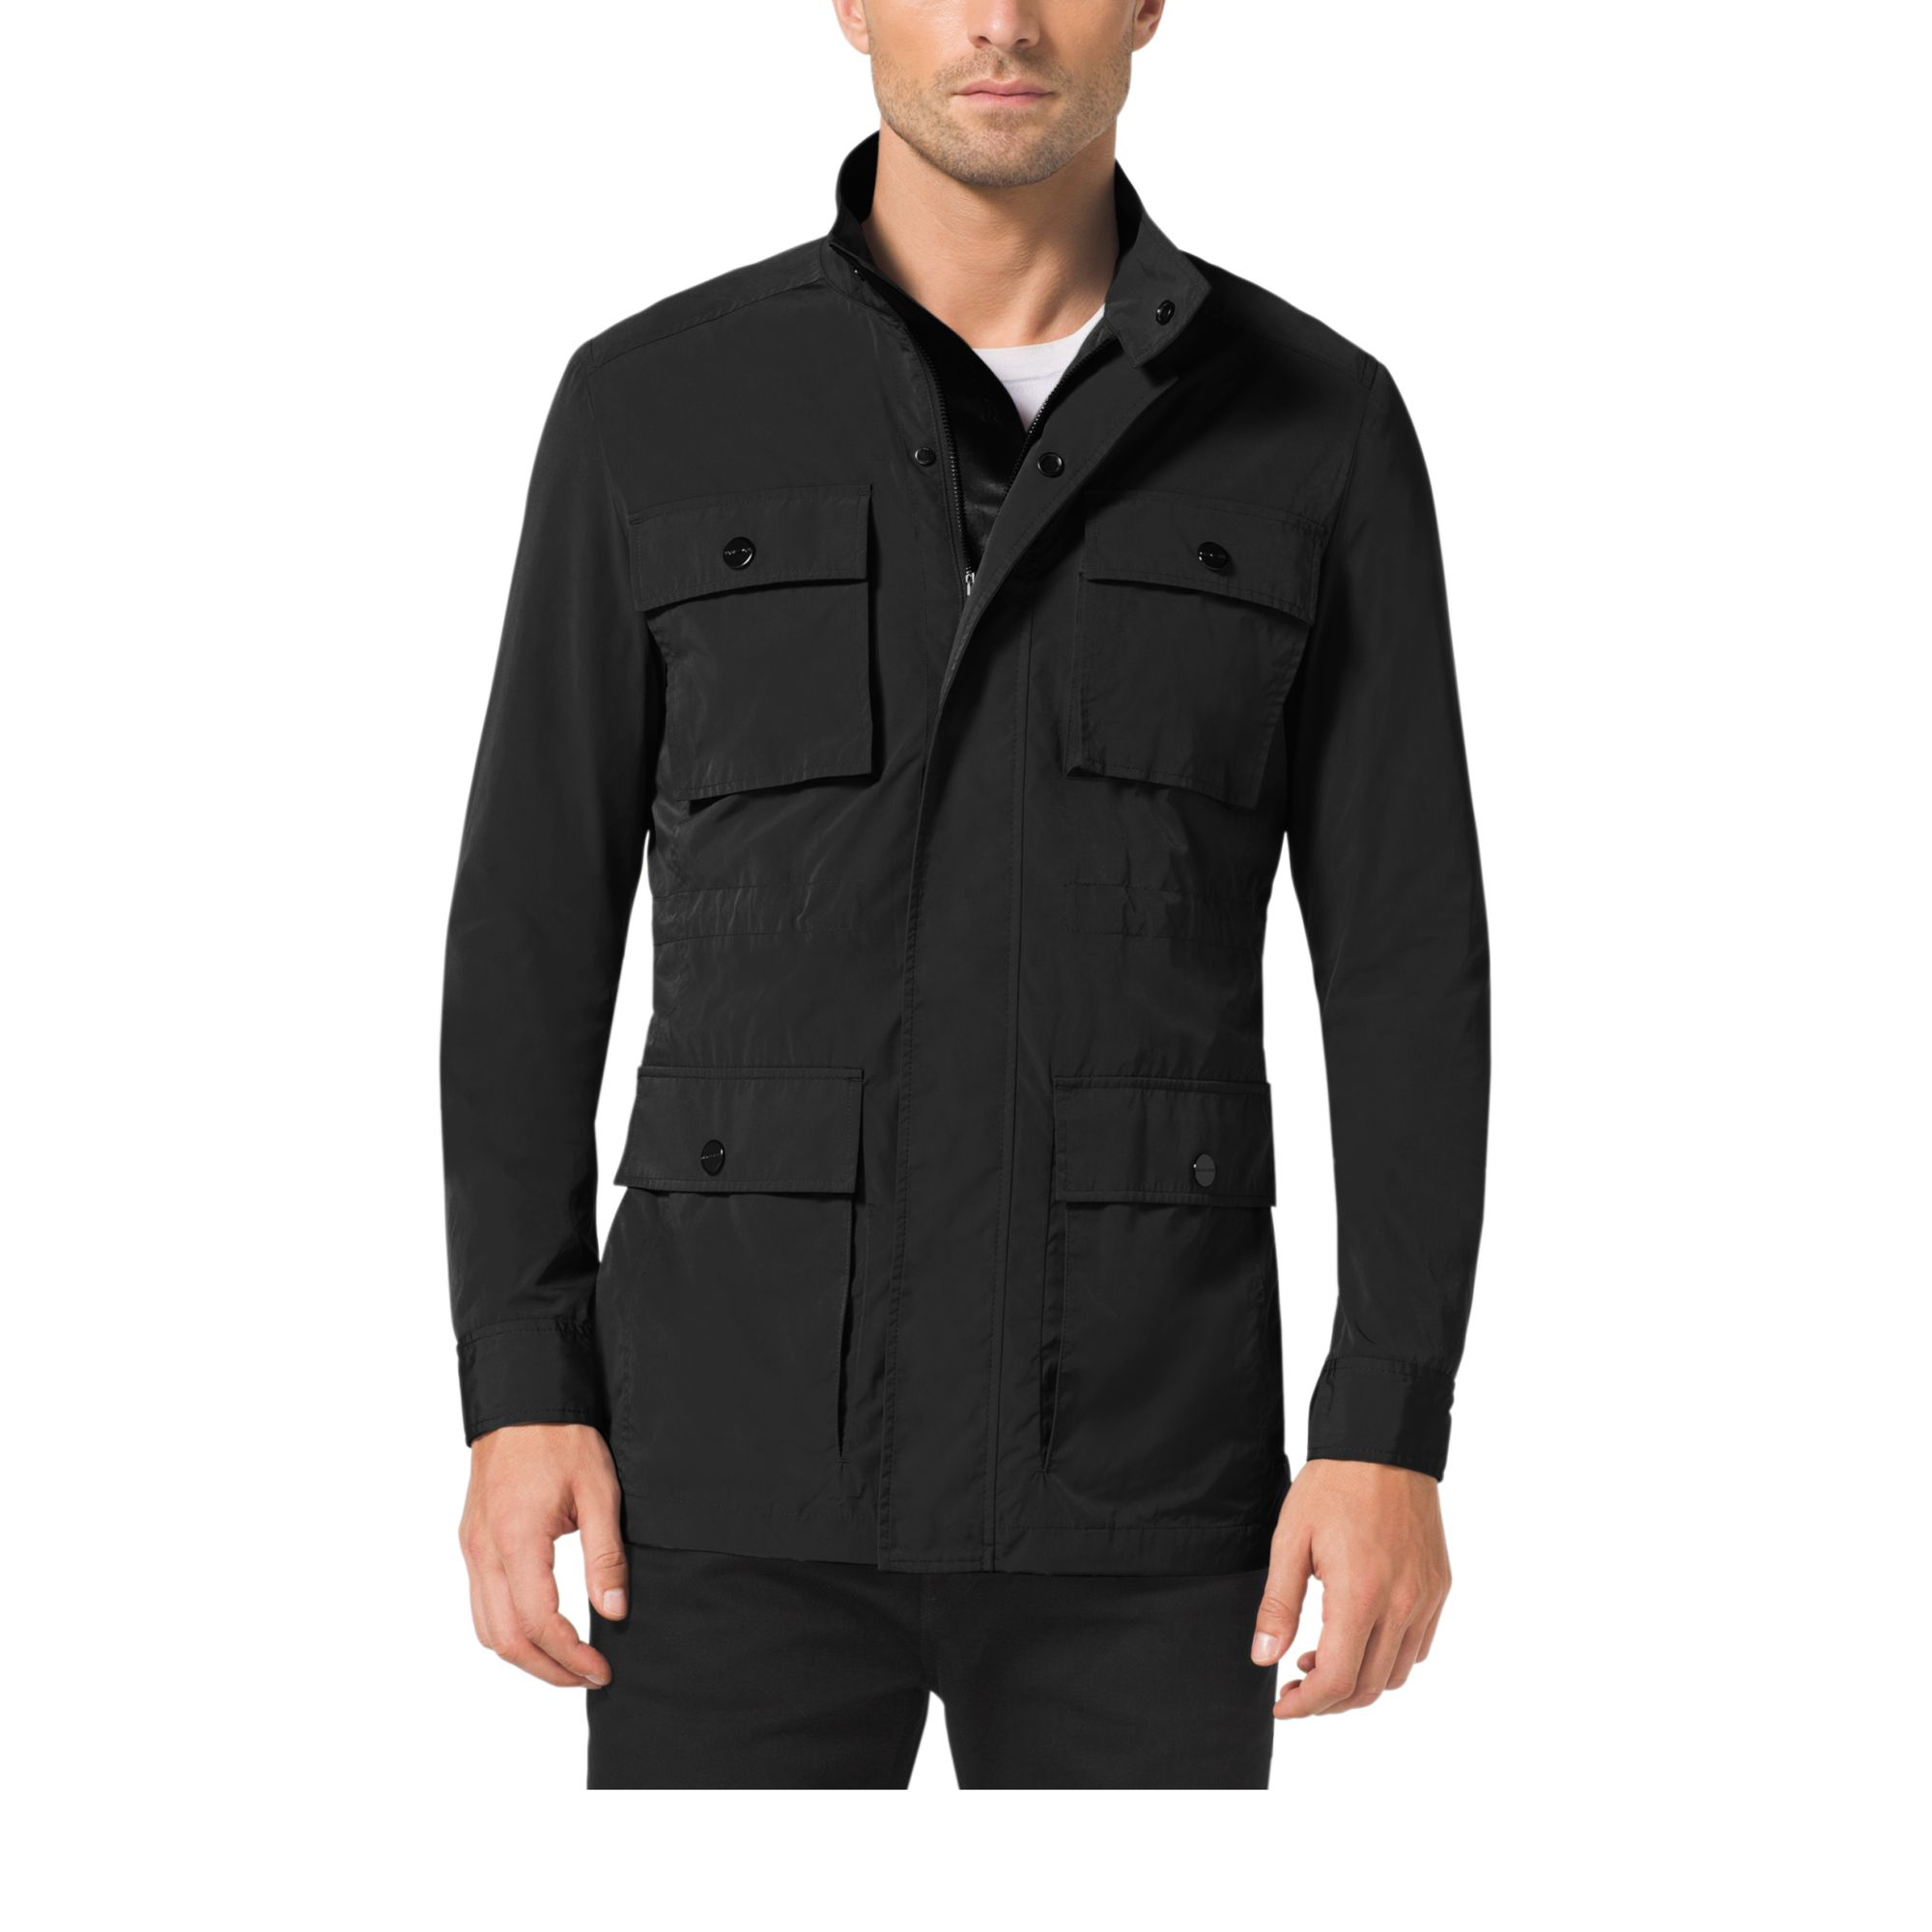 Lyst - Michael Kors Pocket-front Field Jacket in Black for Men